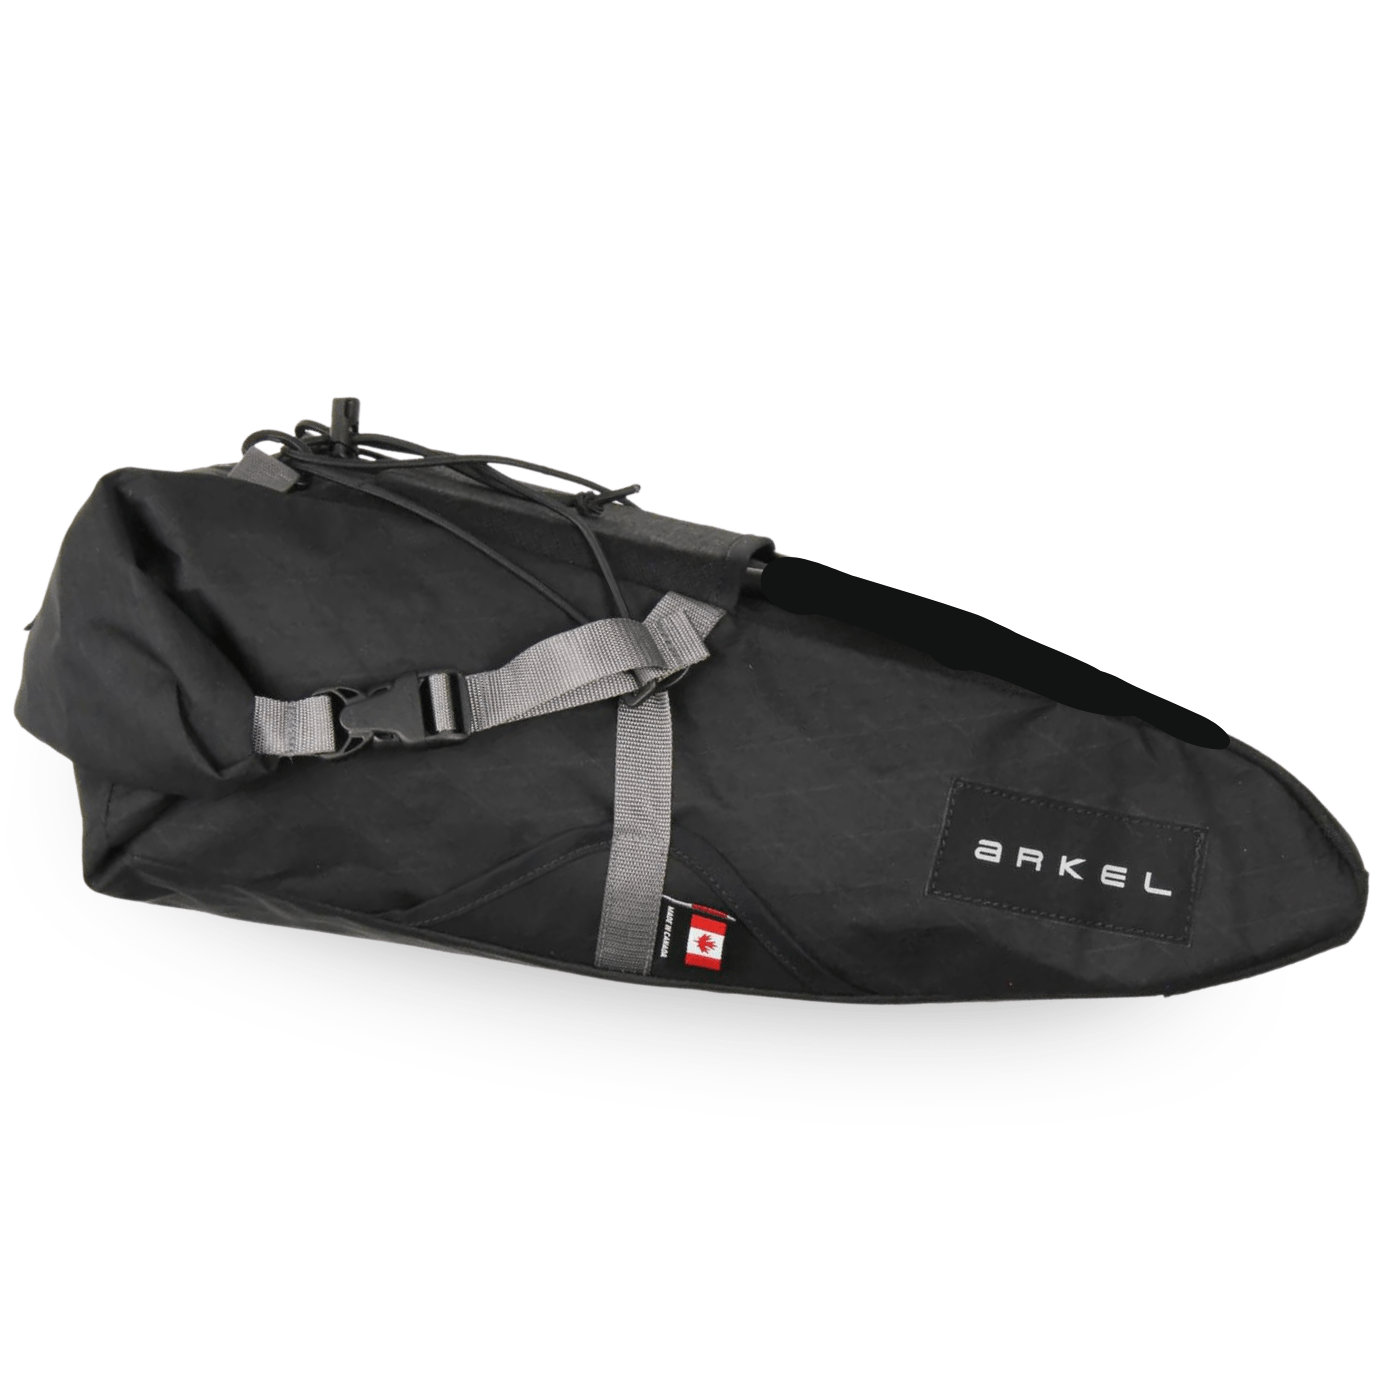 Arkel Bike Bags Large (15 L) / XPac Black Seatpacker Bag - WITHOUT Hanger